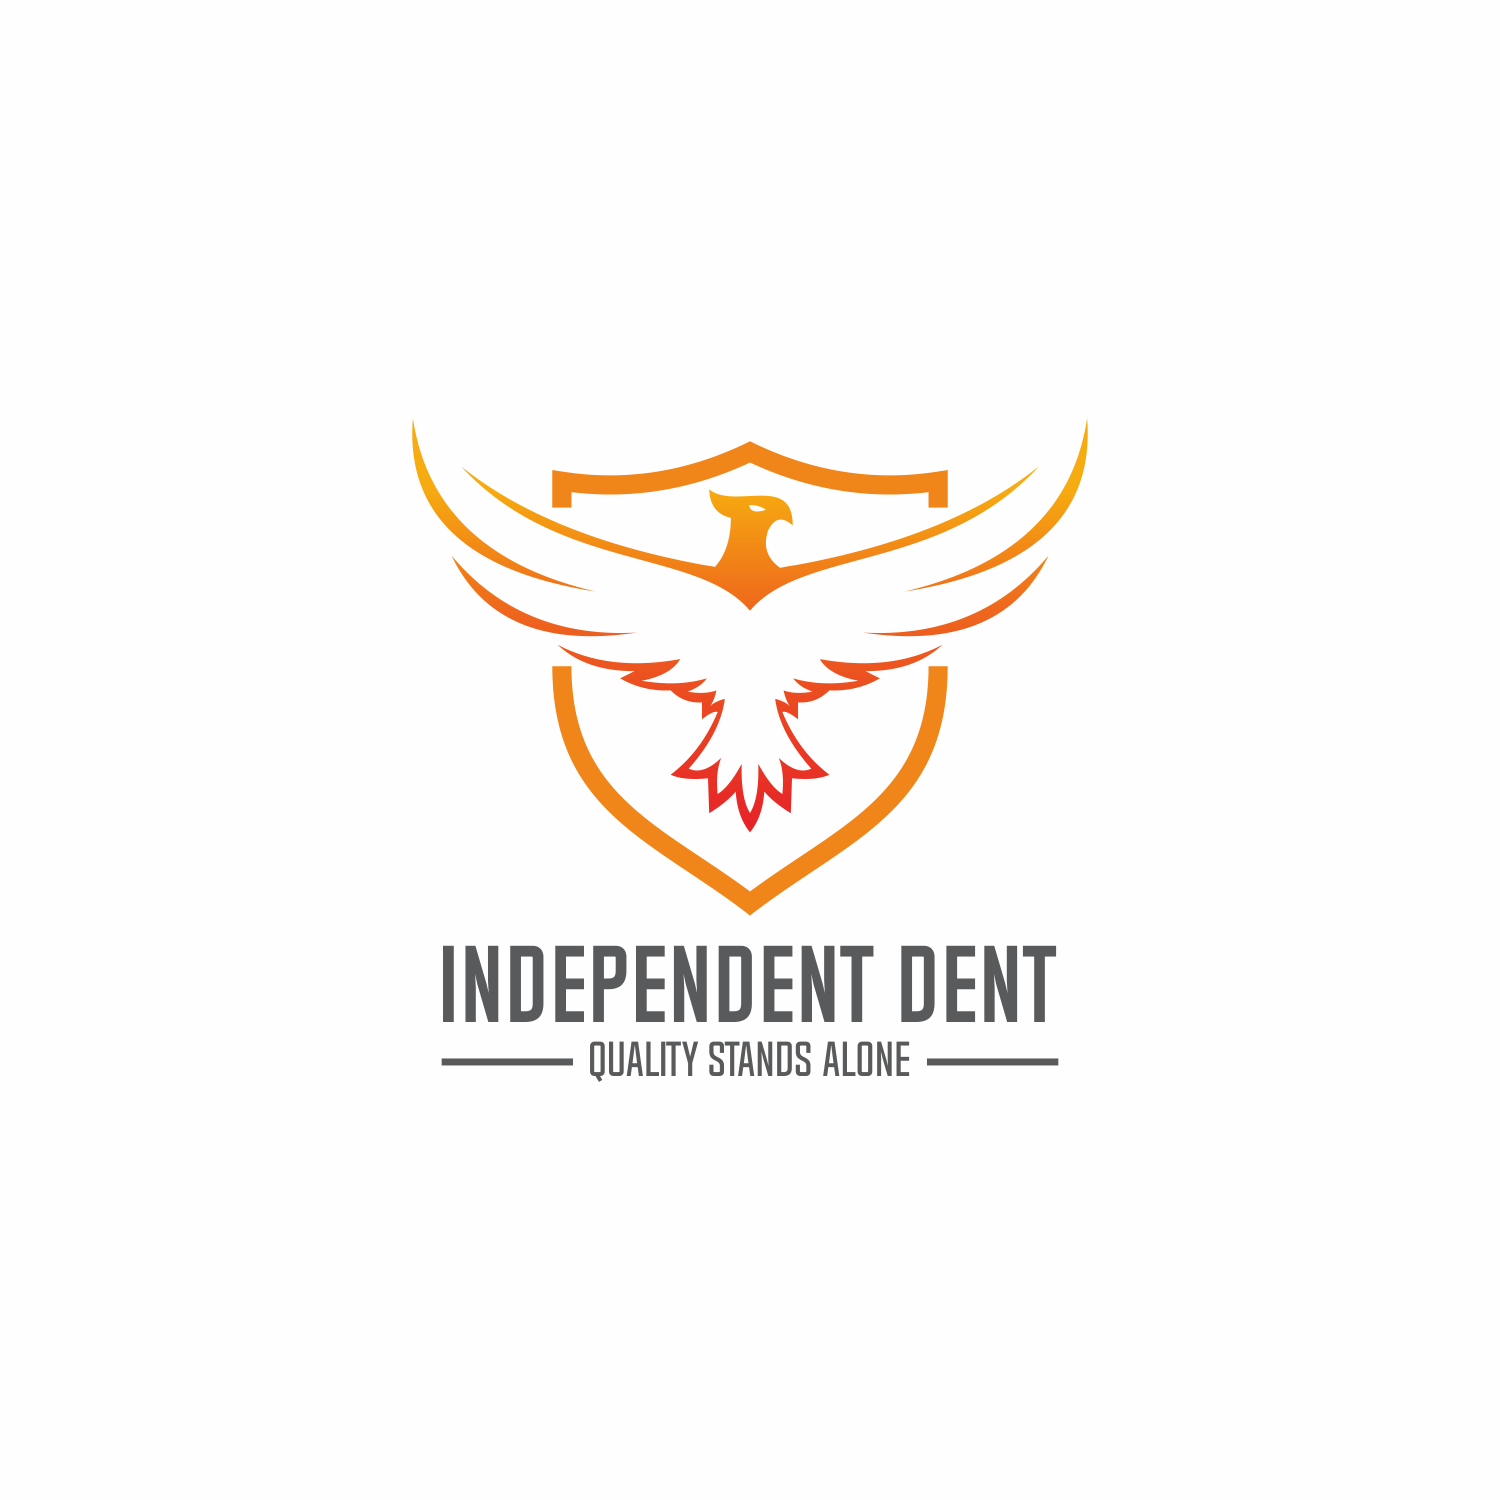 Birds Automotive Company Logo - Bold, Serious, Automotive Logo Design for Independent Dent Company